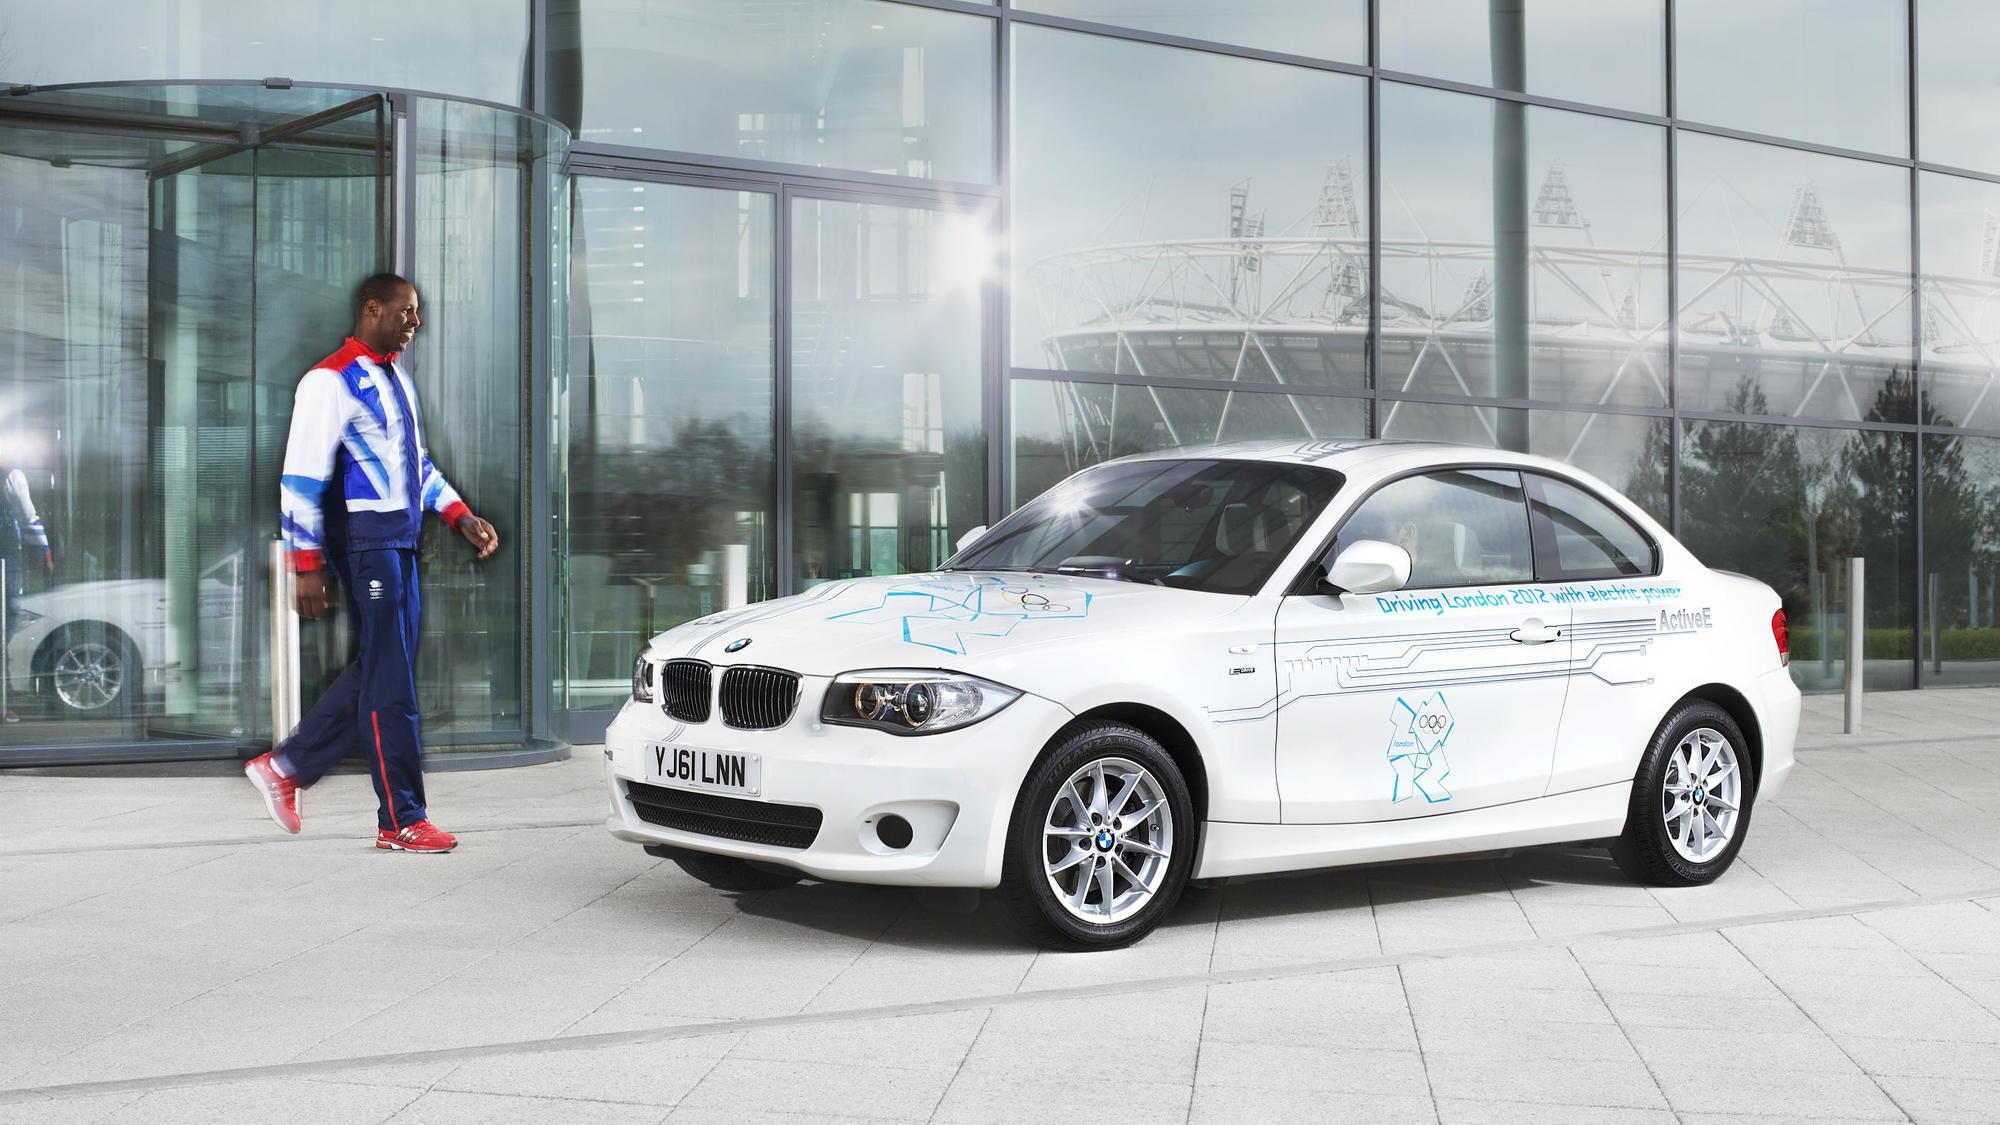 BMW's London 2012 Olympic Games fleet